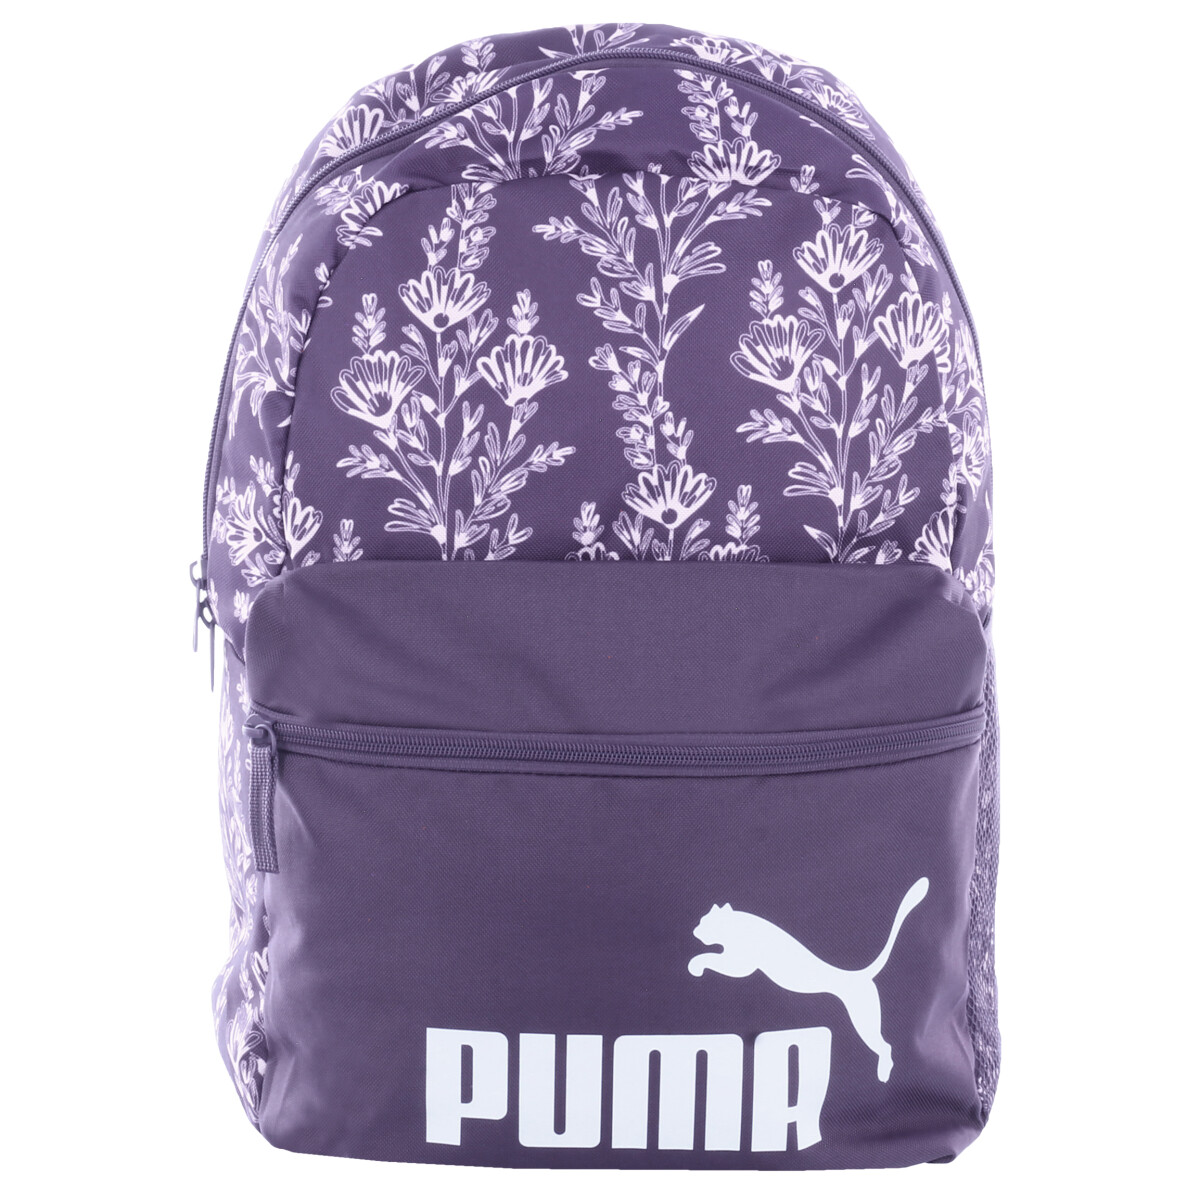 Mochila Phase Backpack Puma - Violeta/Blanco 